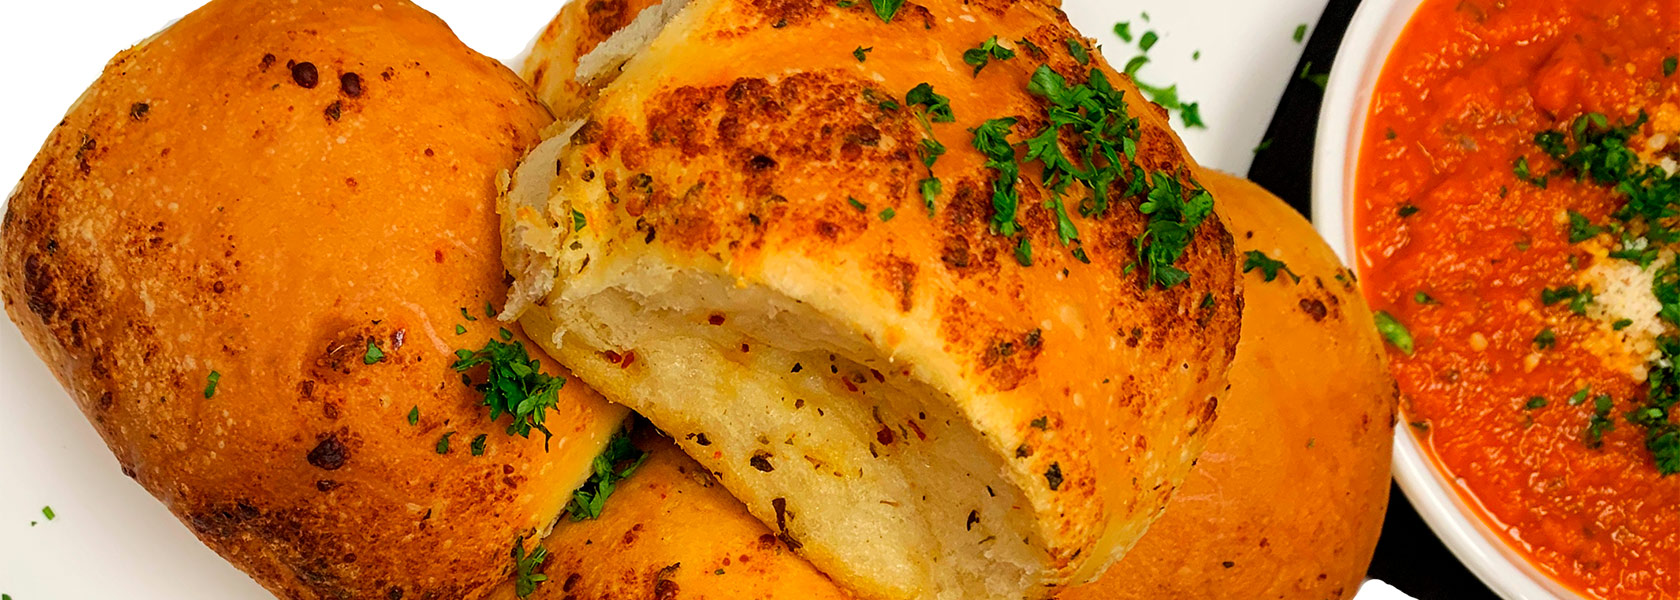 Garlic Herb Rolls plated with marinara dipping sauce.